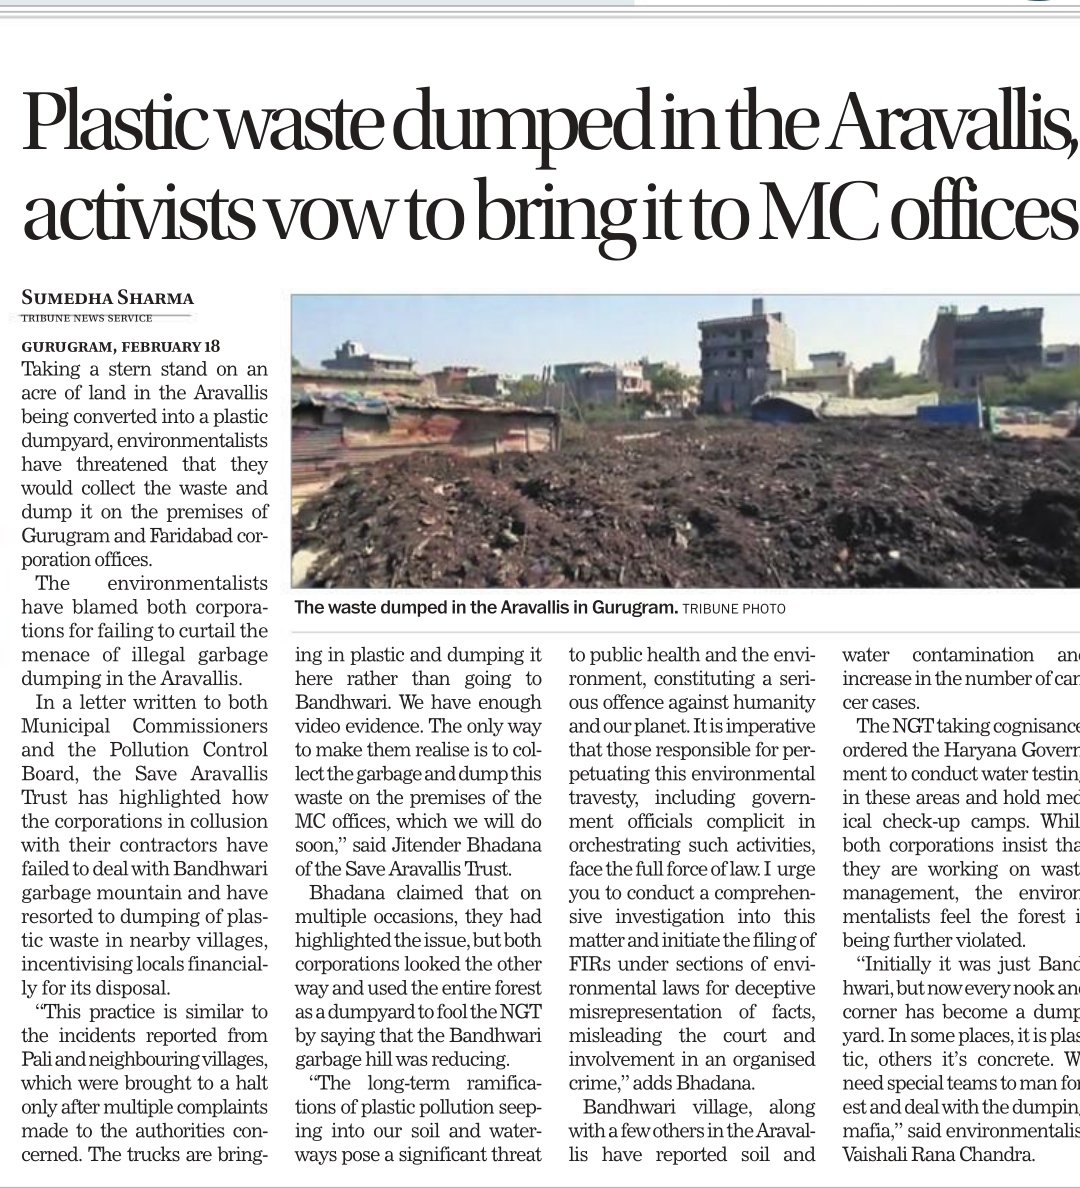 Greens accuse @MunCorpGurugram and @MCF_Faridabad of trying to befool #NGT by dumping waste in other plots near Bandhwari Garbage mountain. Threaten aggressive stir. @SaveAravali @bhadana @Vaishali_Rana_C #Forest #Gurgaon #Faridabad #Gurugram